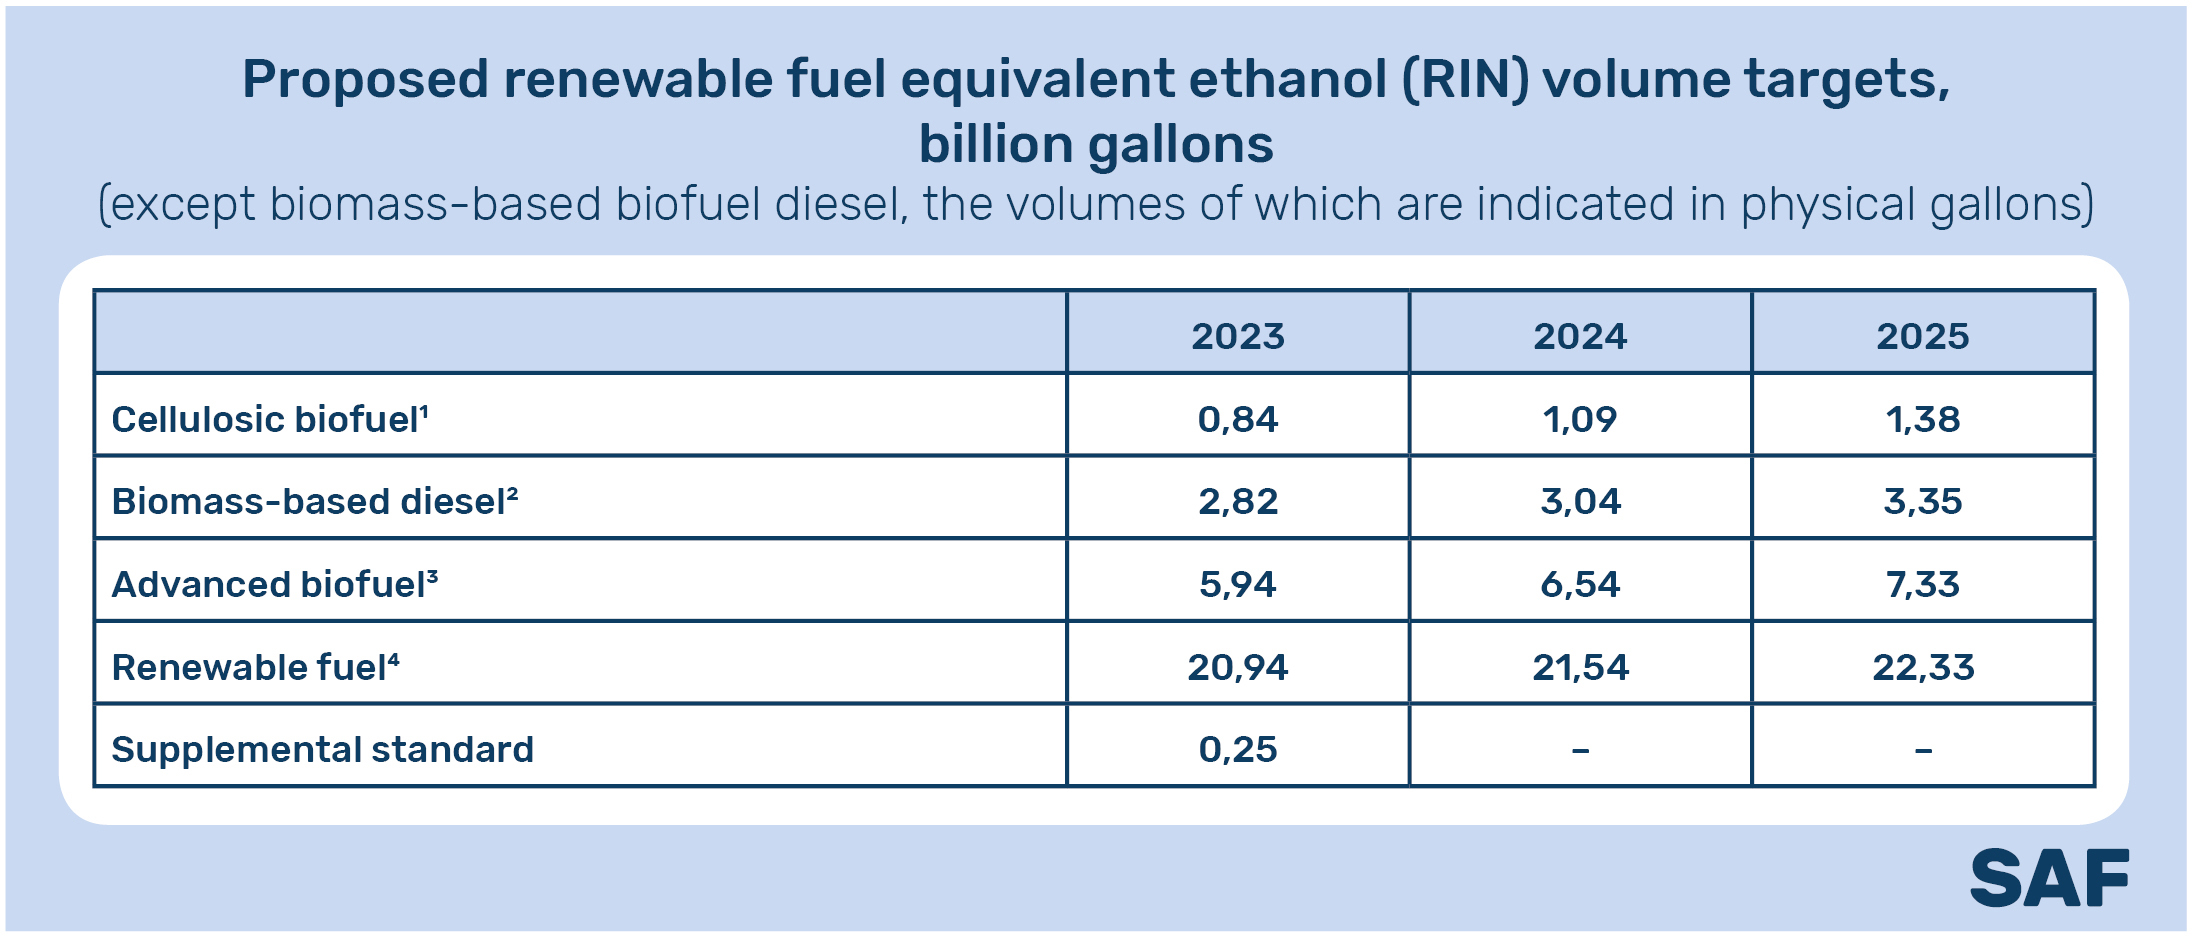 Proposed renewable fuel equivalent ethanol (RIN) volume targets, billion gallons